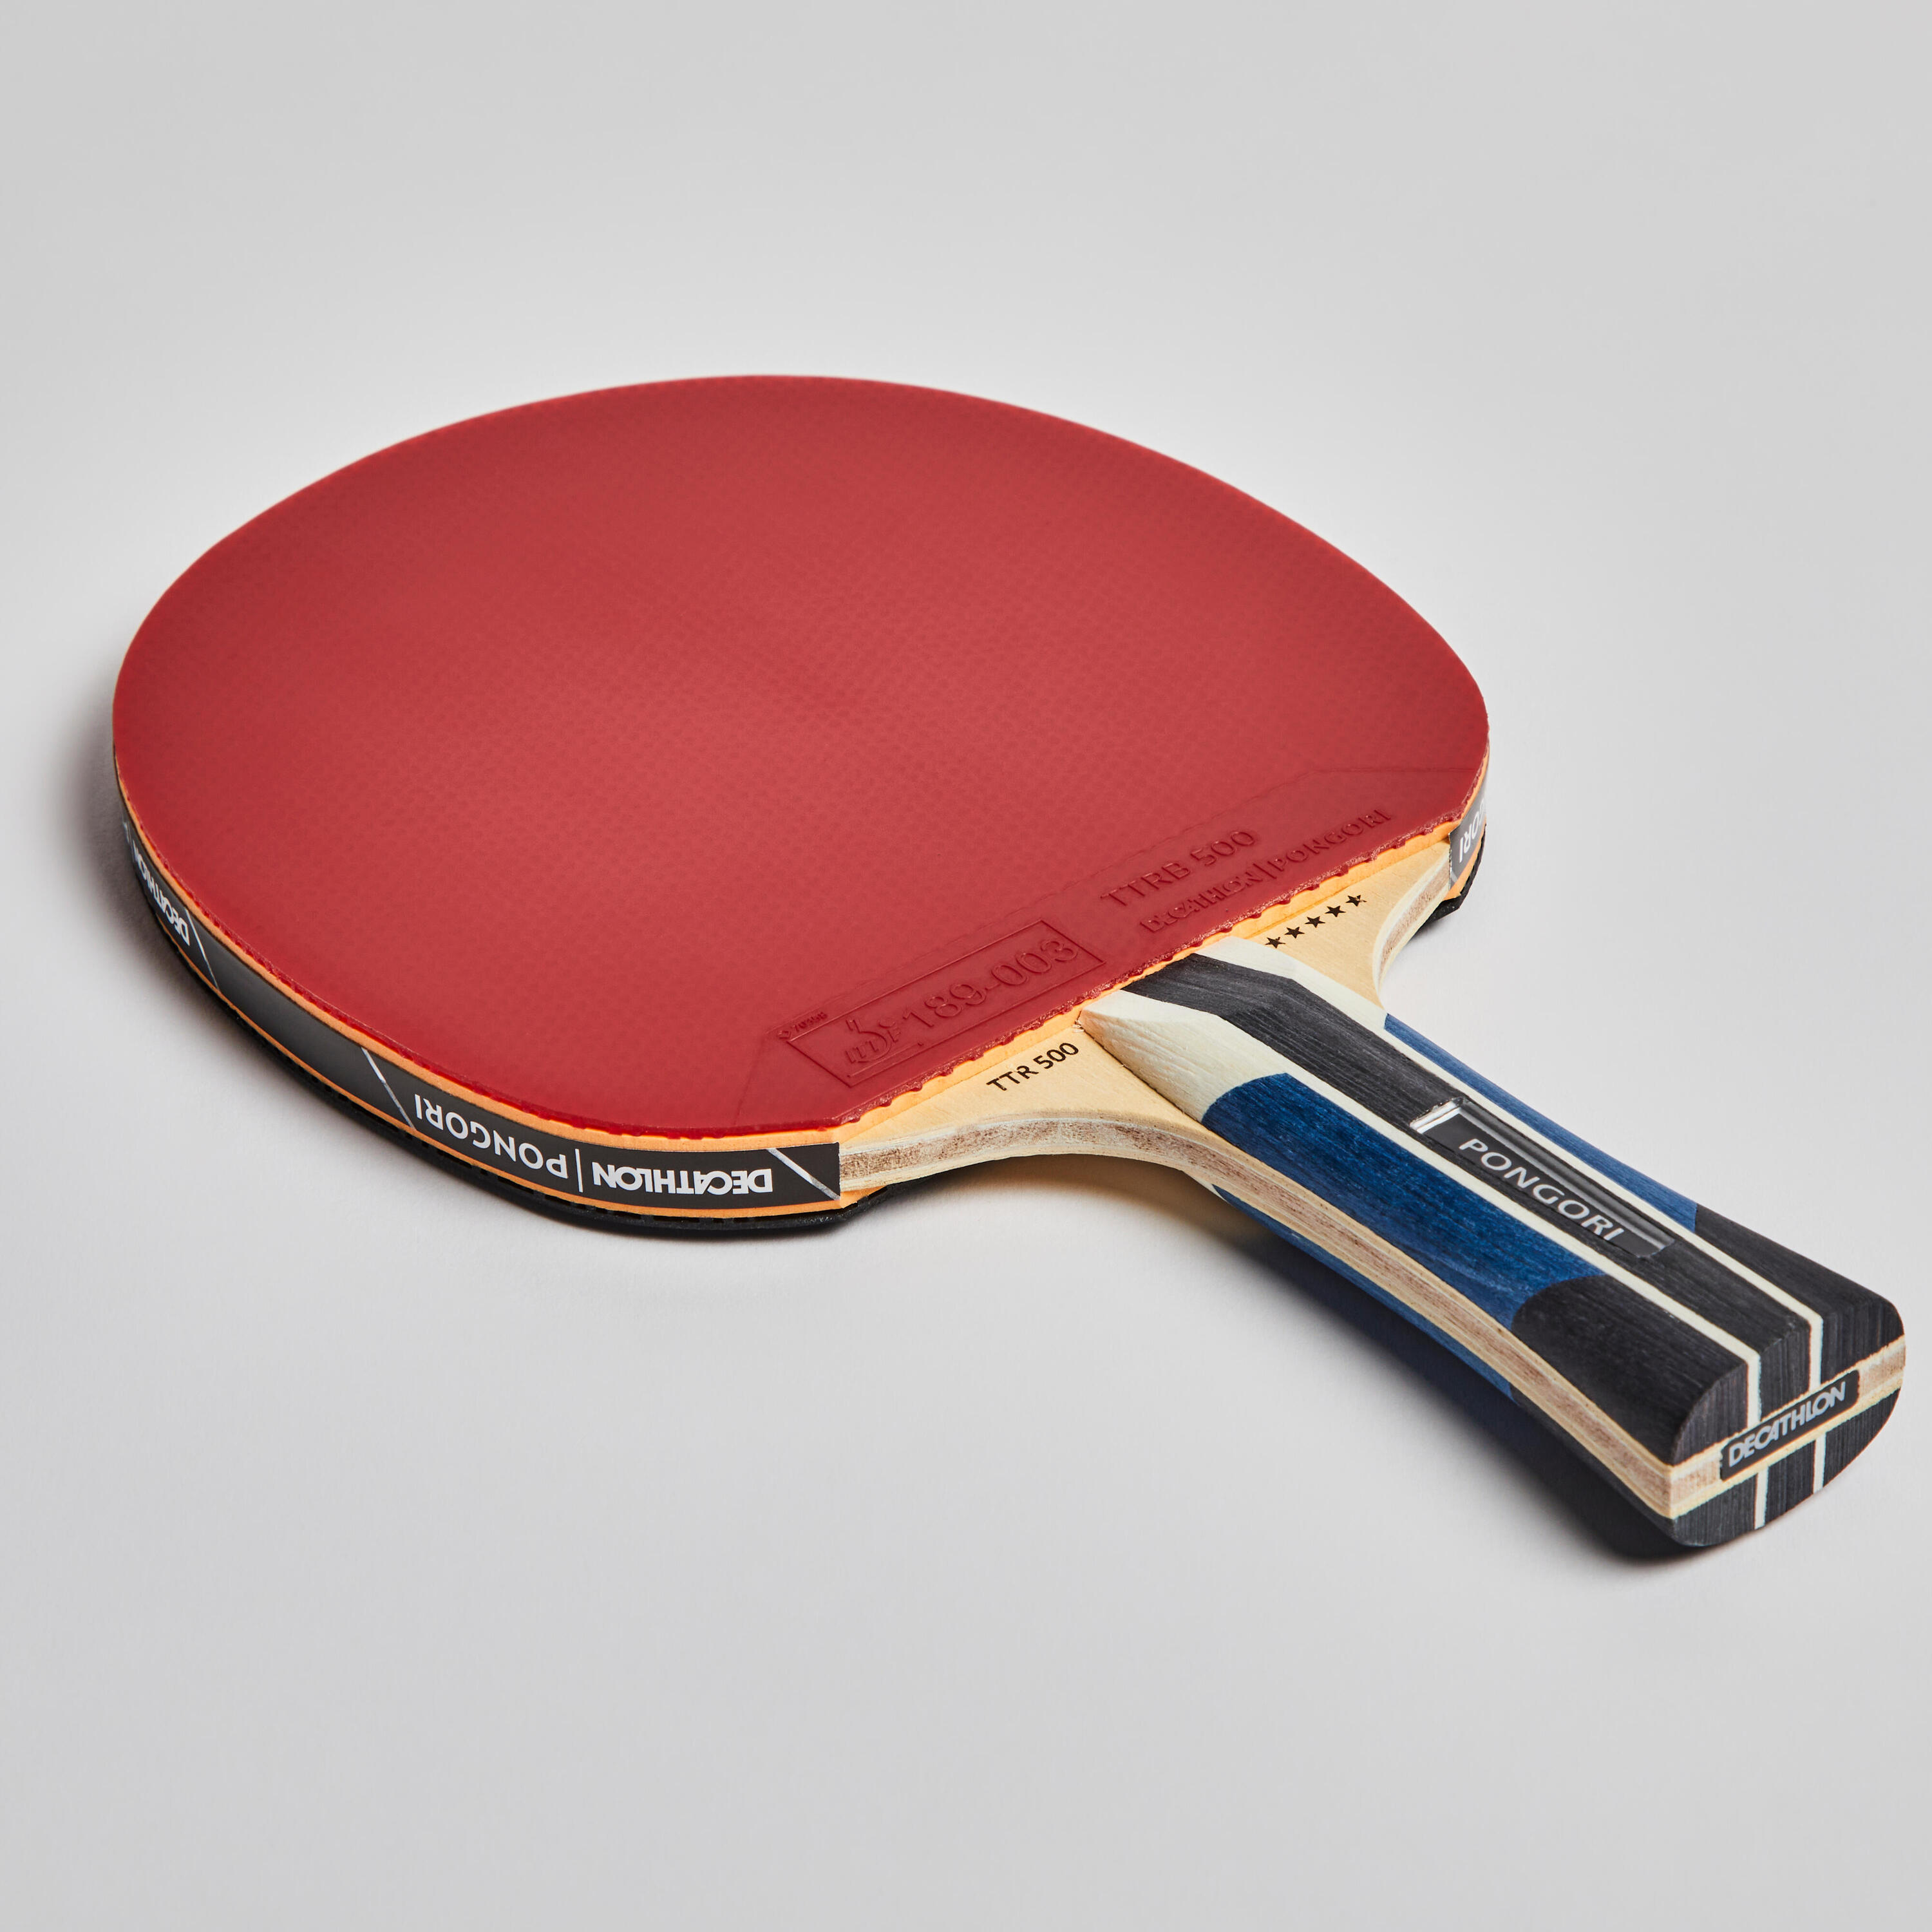 TTR 500 5* Allround Club Table Tennis Bat 4/21